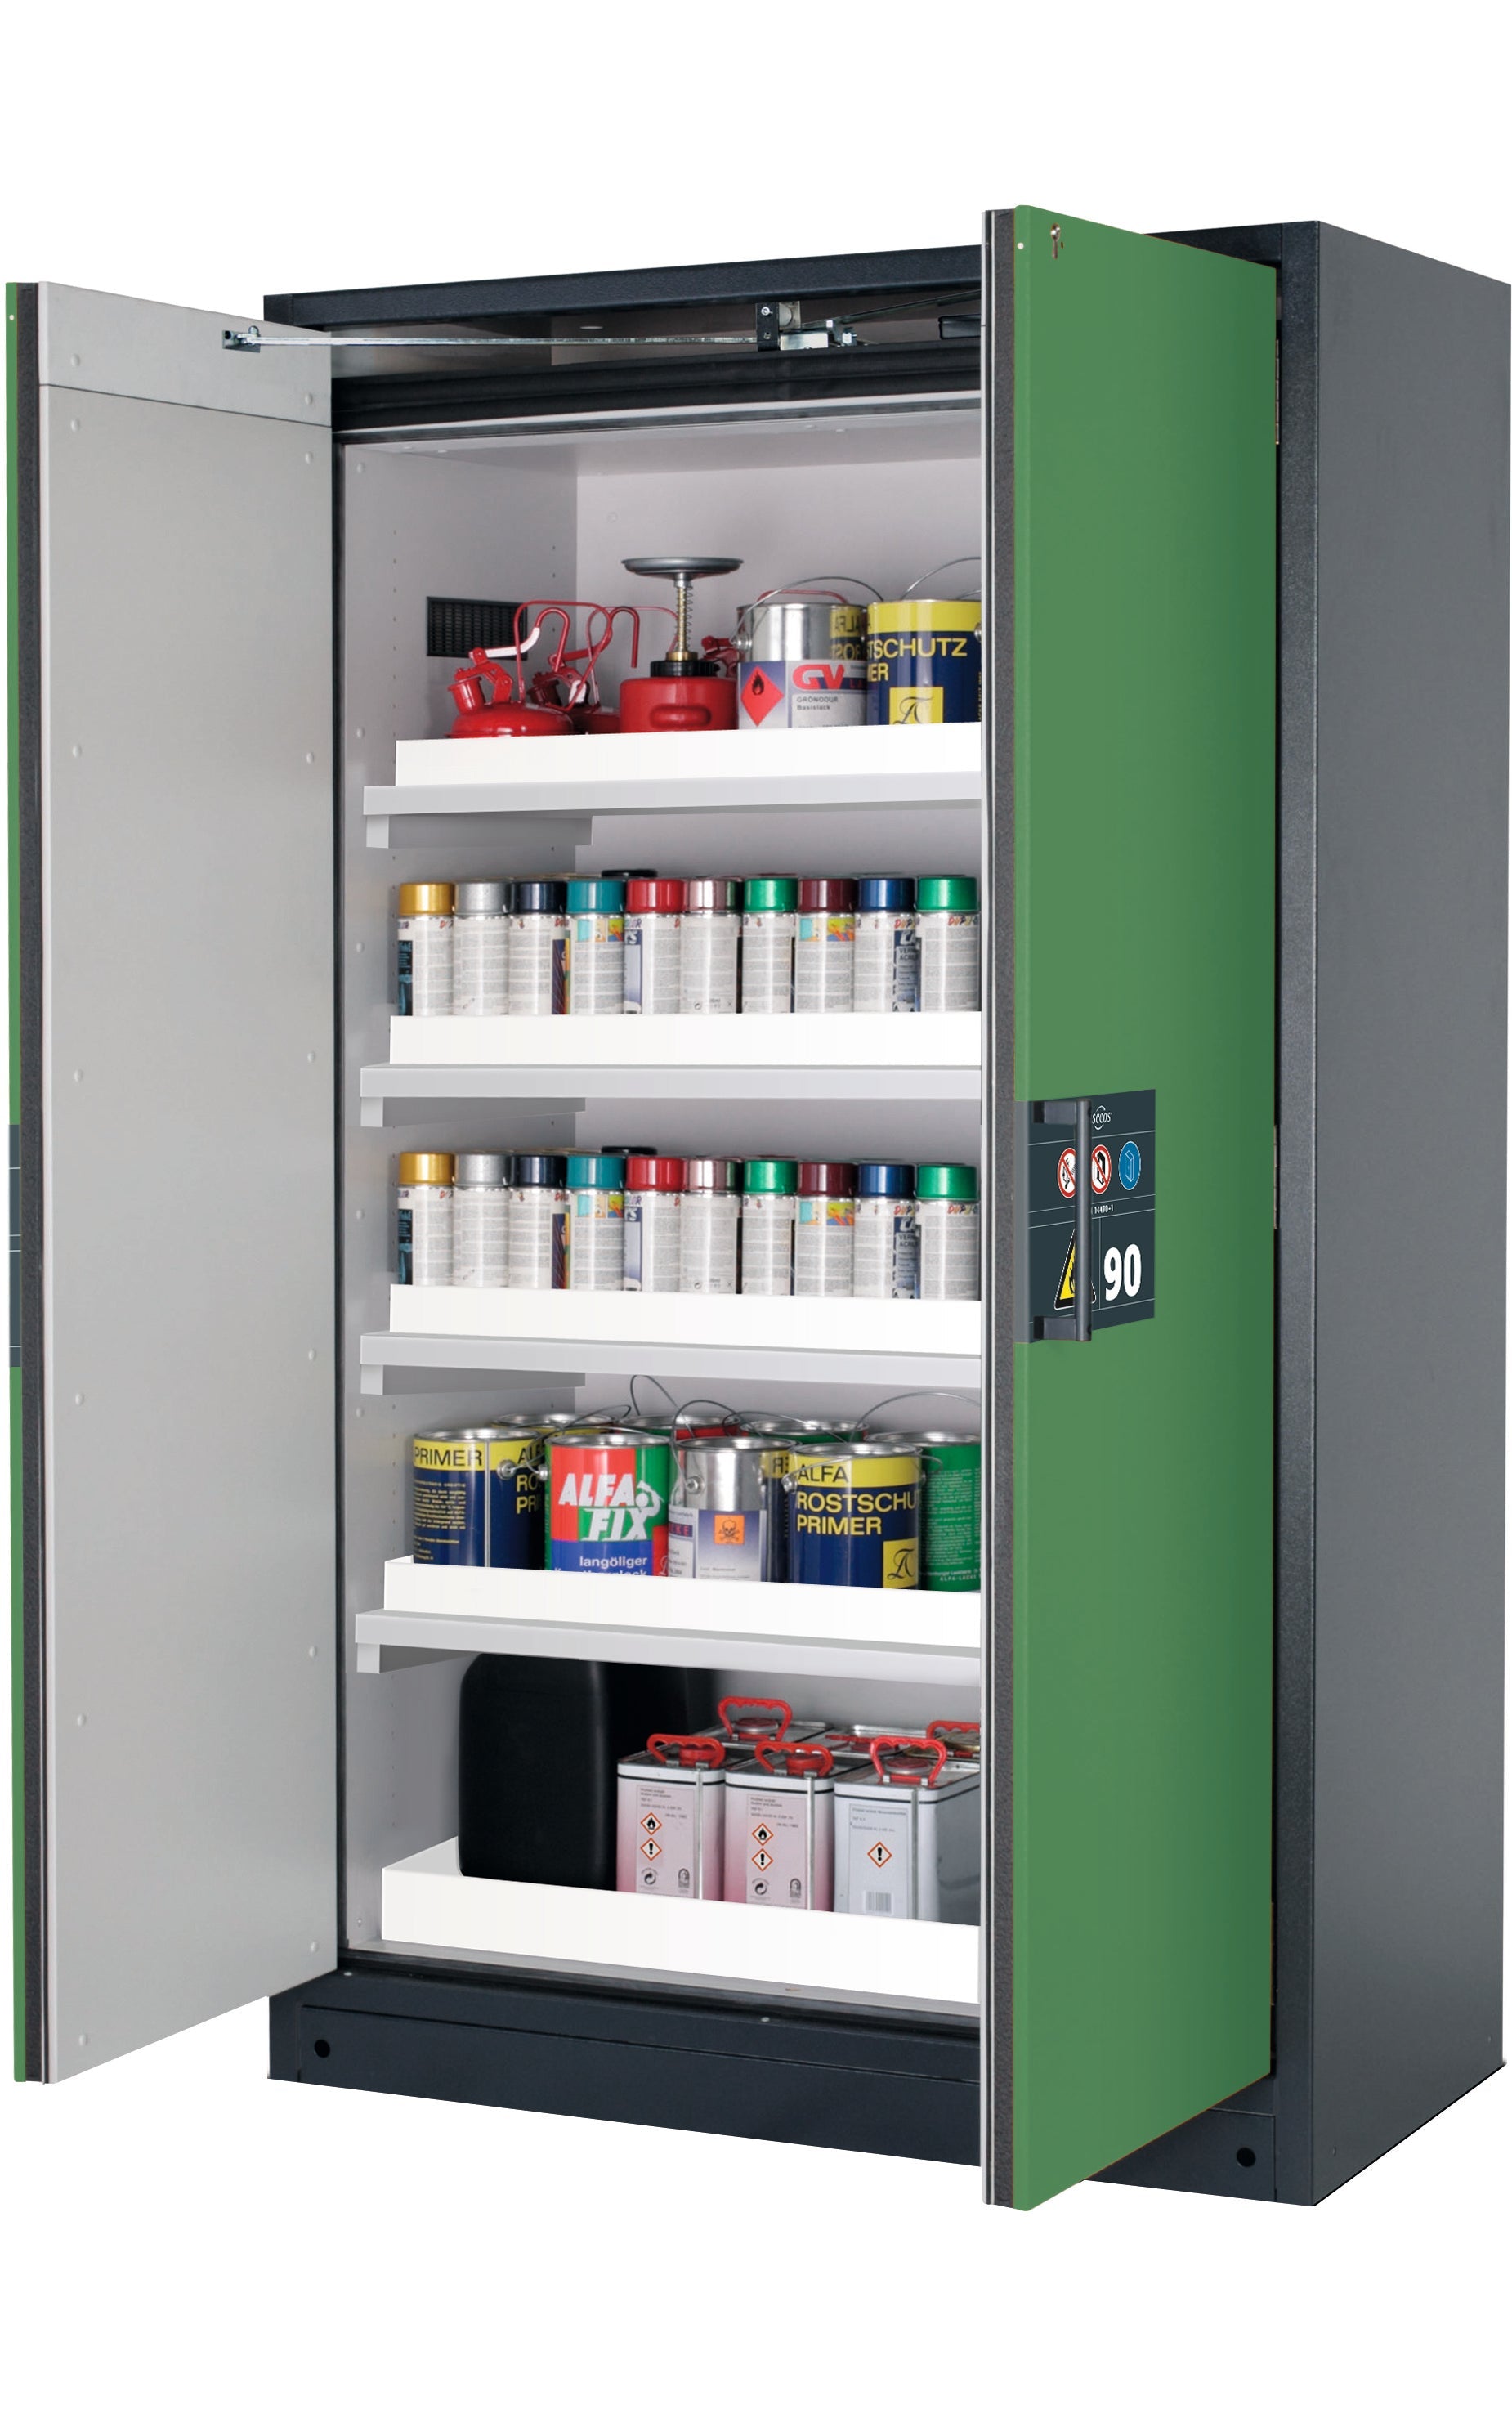 Type 90 safety storage cabinet Q-PEGASUS-90 model Q90.195.120.WDAC in reseda green RAL 6011 with 4x tray shelf (standard) (polypropylene),